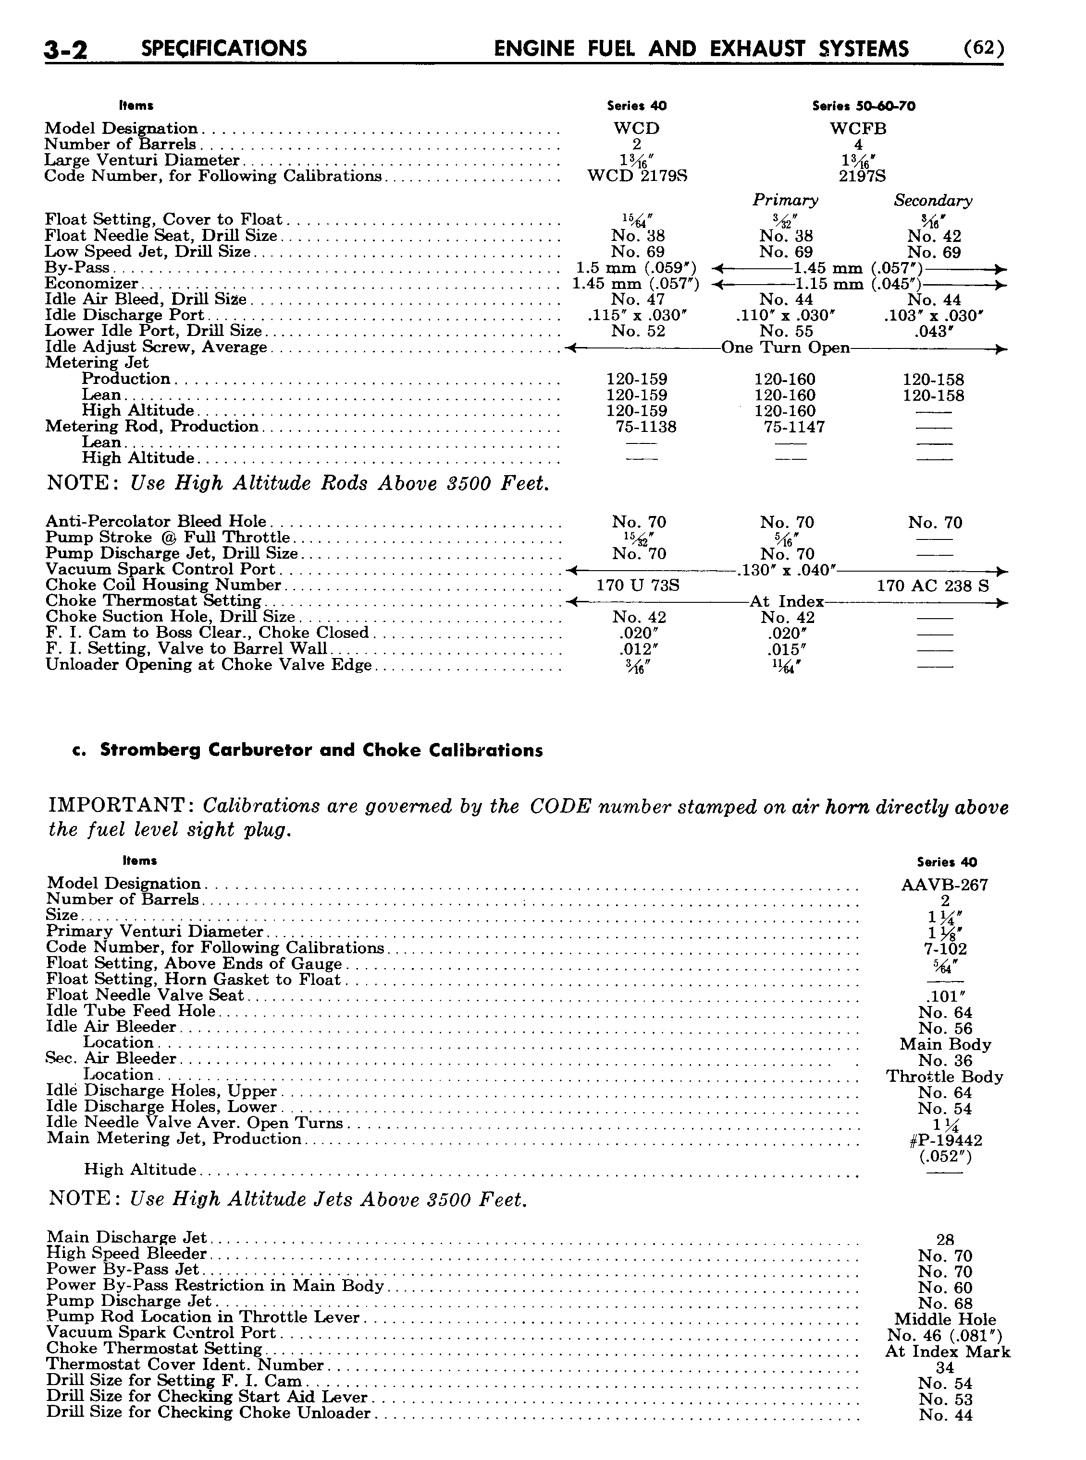 n_04 1955 Buick Shop Manual - Engine Fuel & Exhaust-002-002.jpg